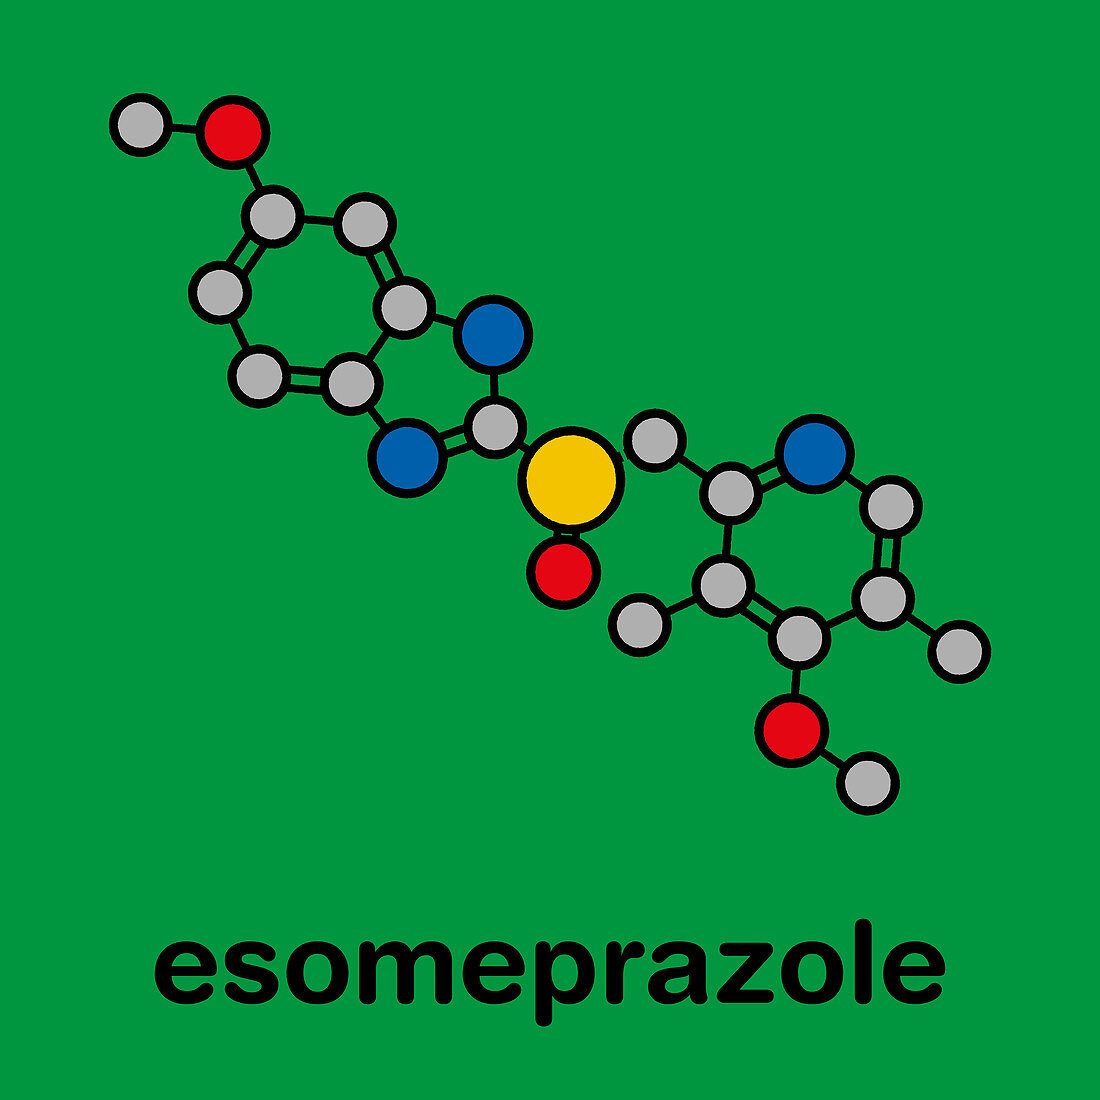 Esomeprazole peptic ulcer drug molecule, illustration